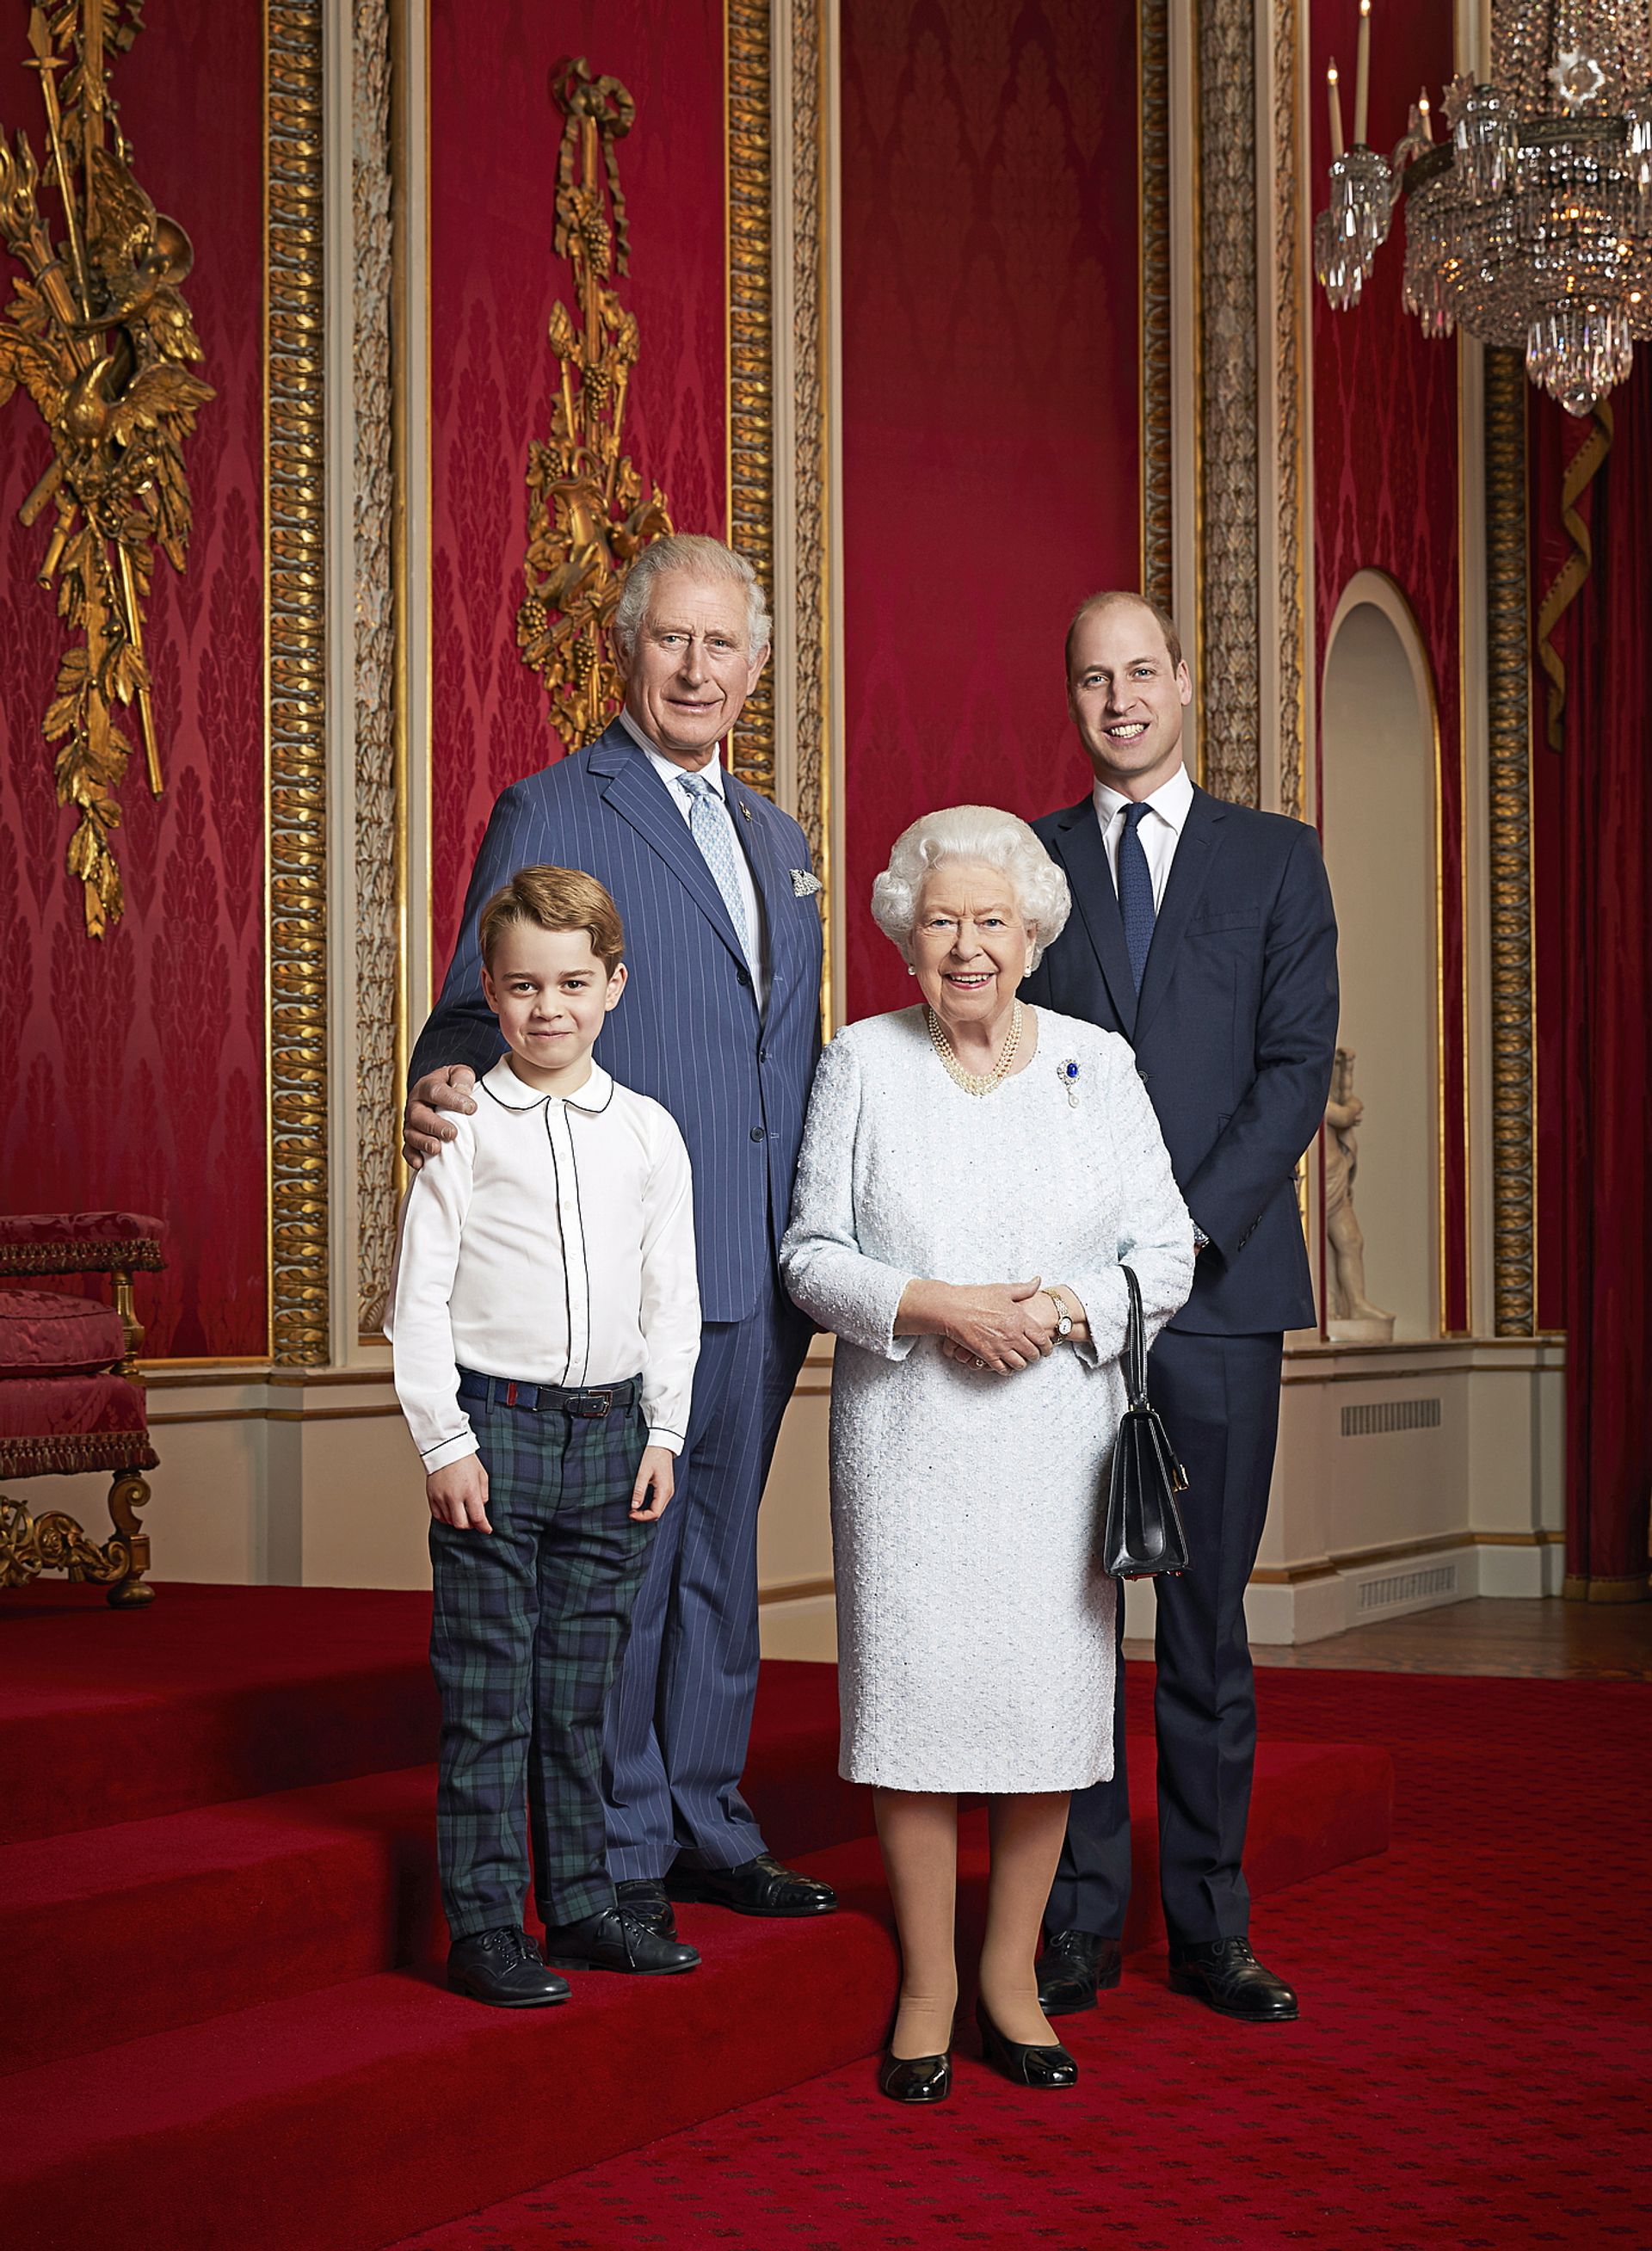 Koningin Elizabeth en de drie prinsen in de lijn van troonopvolging: prins Charles, prins William en